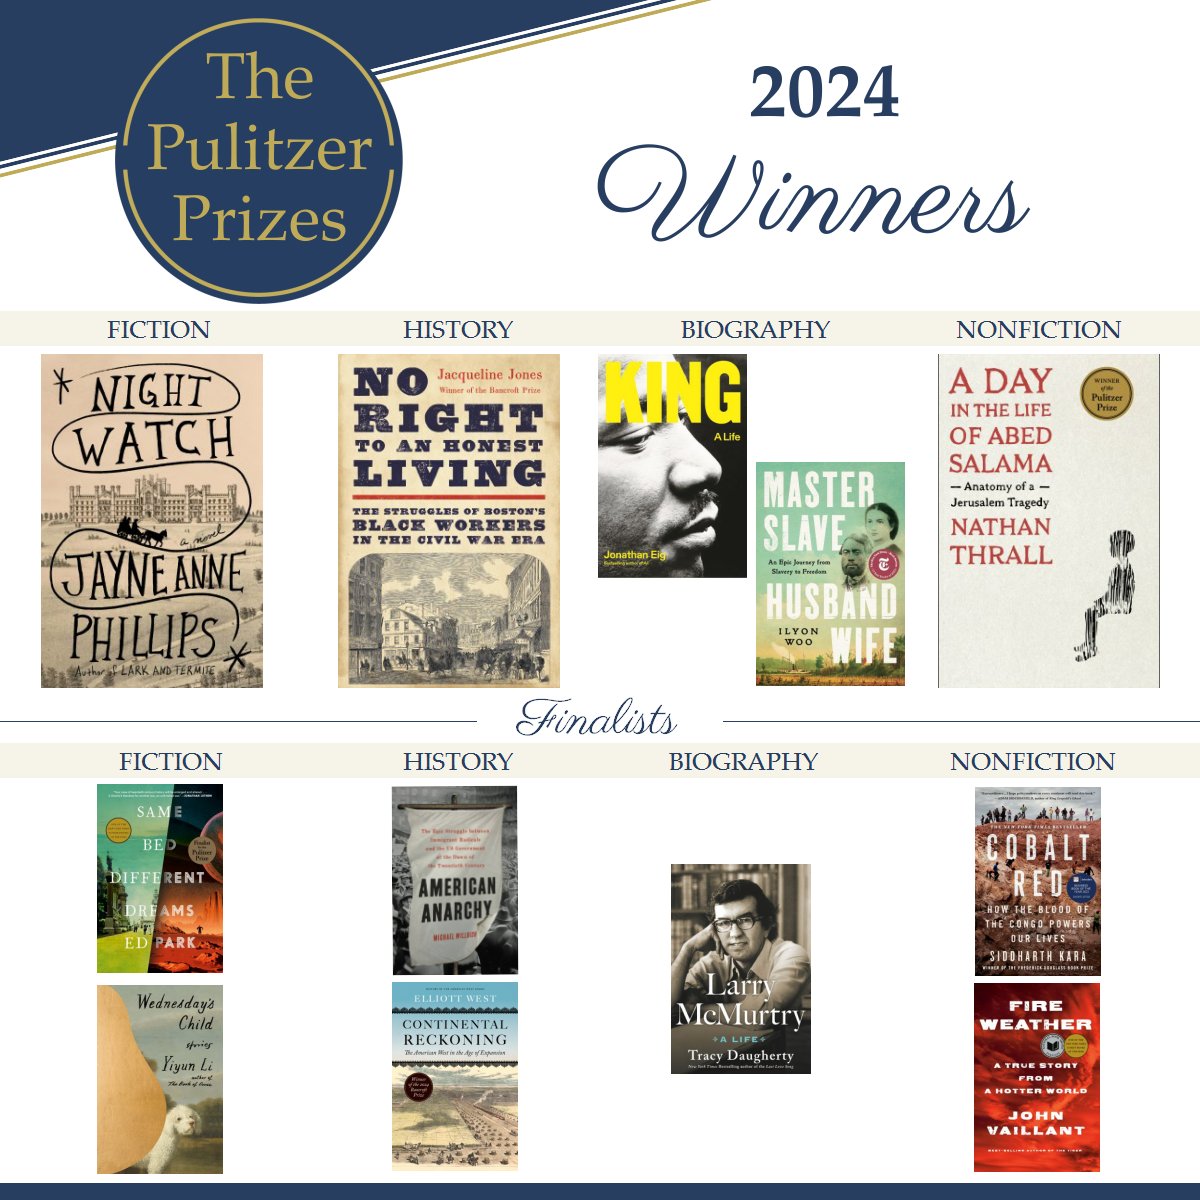 𝗖𝗵𝗲𝗰𝗸 𝗼𝘂𝘁 𝘁𝗵𝗲 𝟮𝟬𝟮𝟰 𝗣𝘂𝗹𝗶𝘁𝘇𝗲𝗿 𝗣𝗿𝗶𝘇𝗲 𝗪𝗶𝗻𝗻𝗲𝗿𝘀 𝗶𝗻 𝗼𝘂𝗿 𝗰𝗼𝗹𝗹𝗲𝗰𝘁𝗶𝗼𝗻. 📚🏅 Link below! 📎👇
tinyurl.com/Pulitzer2024

#books #reading #PulitzerPrize2024 #awardwinners